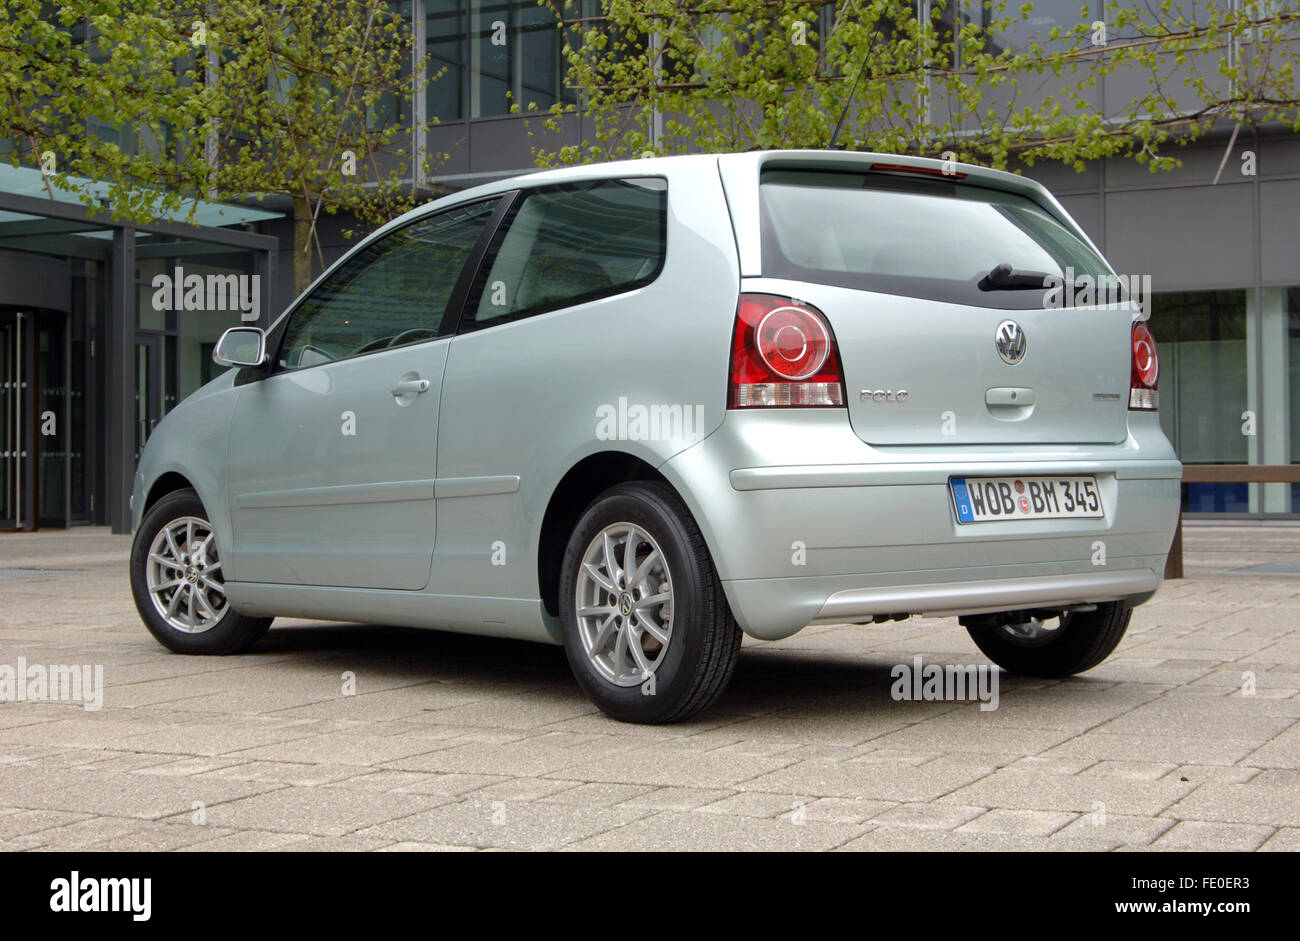 2007 VW Volkswagen Polo BlueMotion high efficiency diesel eco car Stock  Photo - Alamy